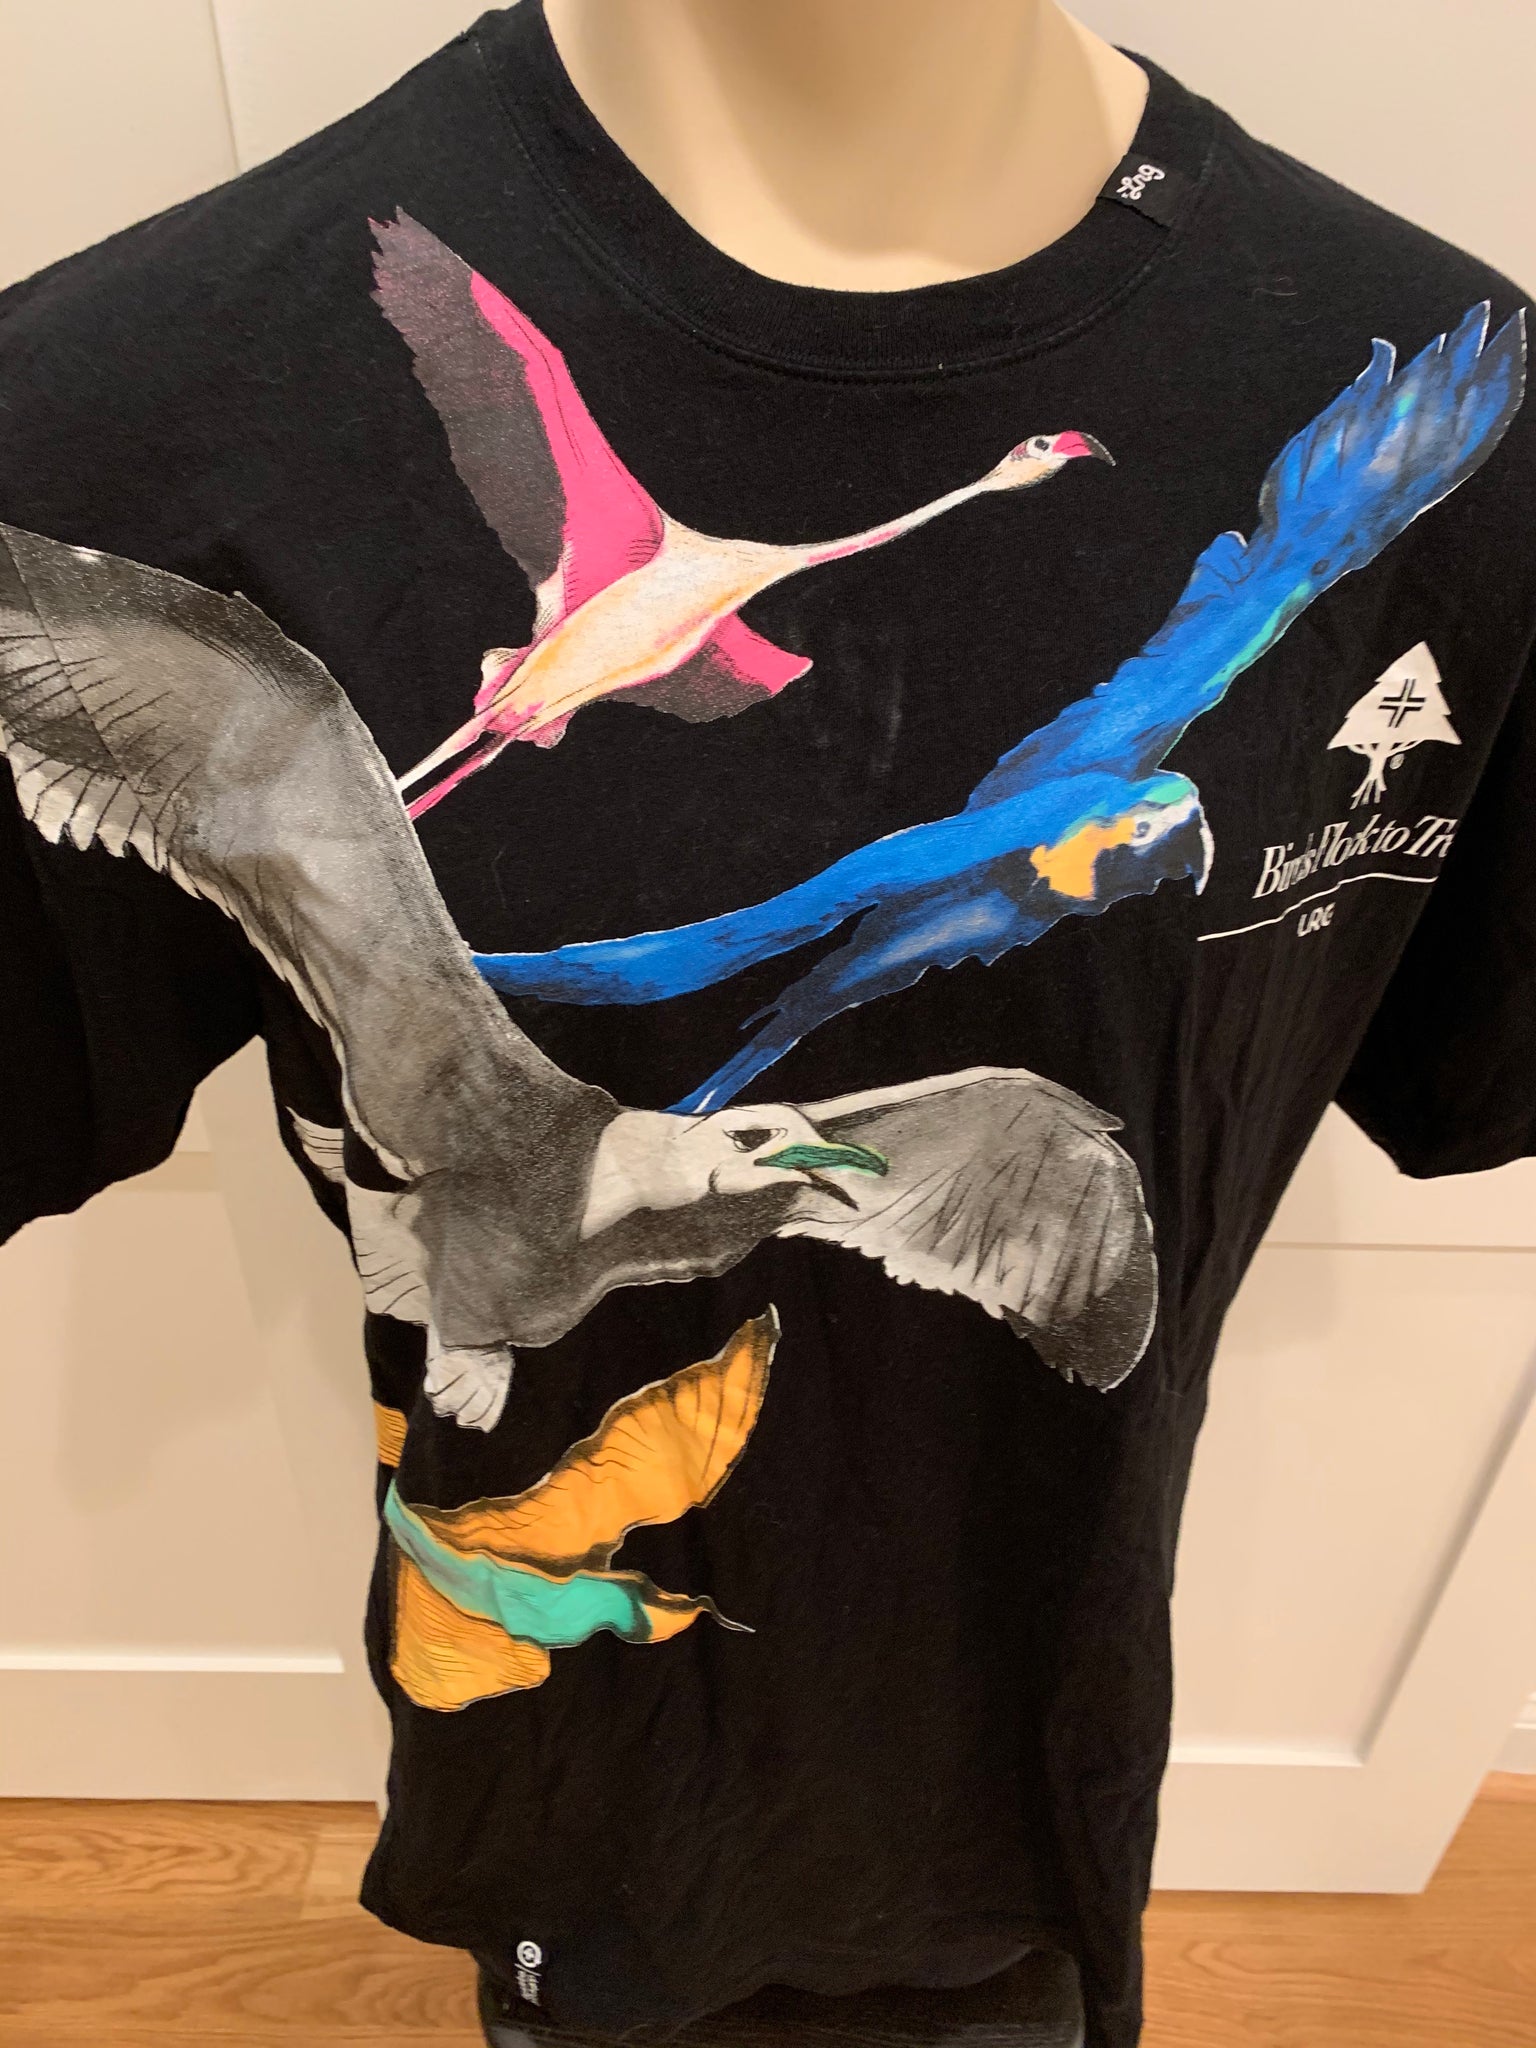 LRG "Birds Flock to Trees" Tee Shirt - Black (XL)